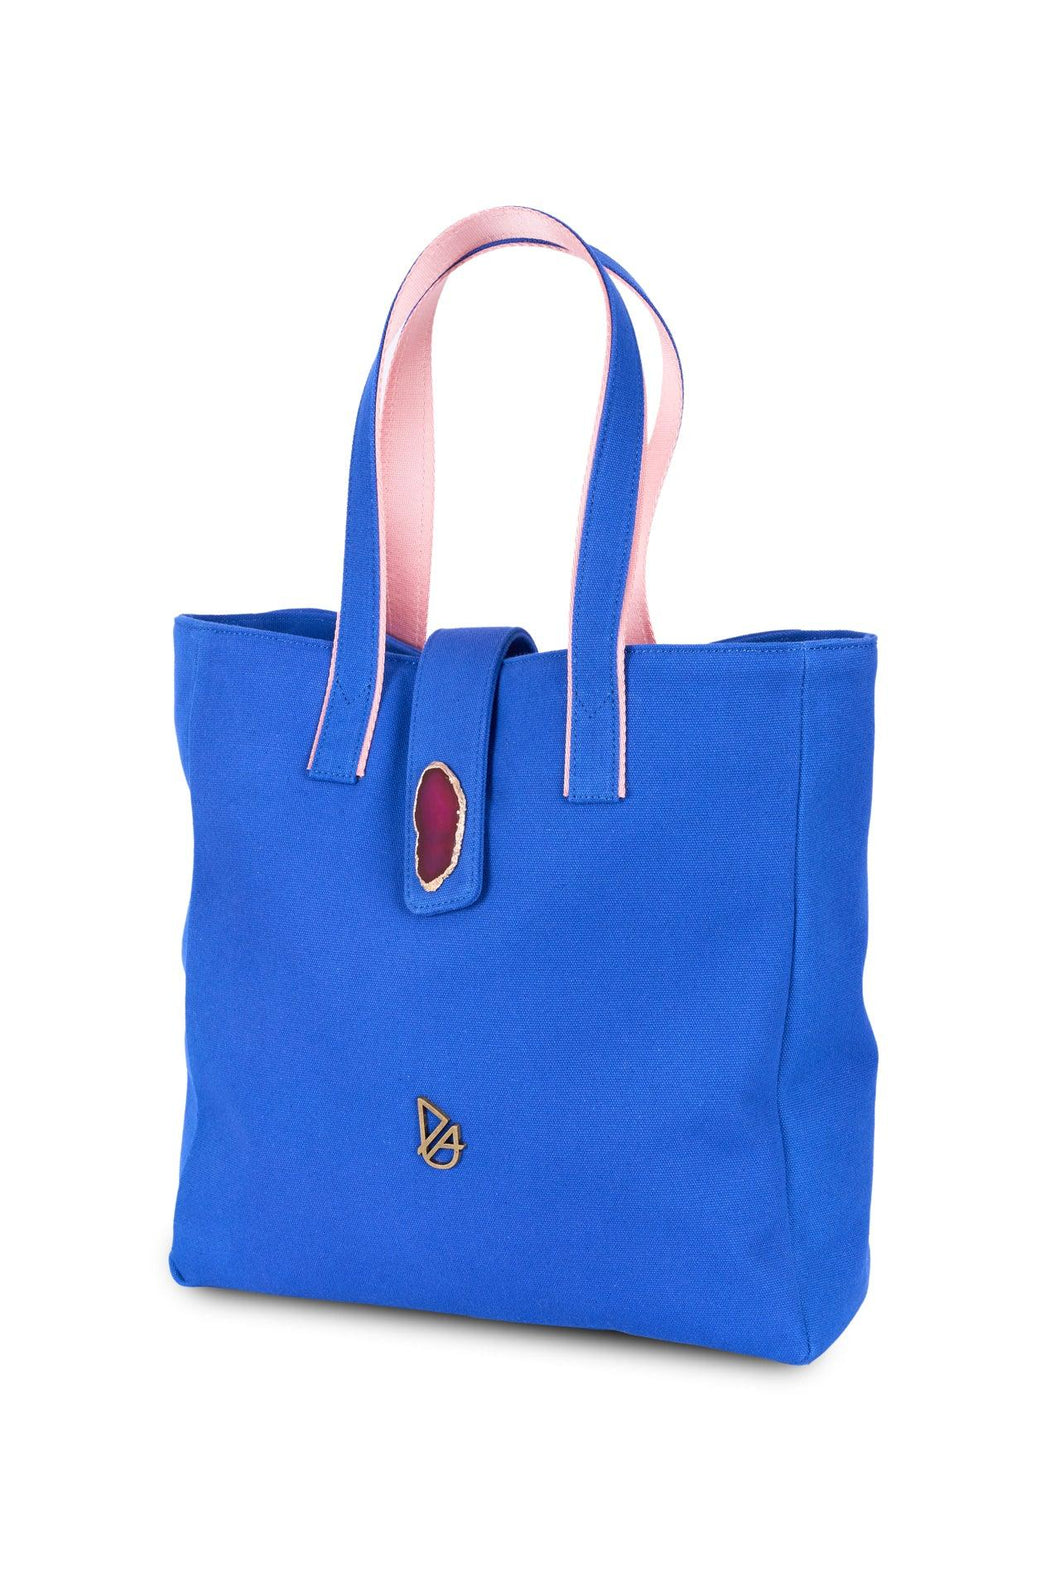 AMAYA Royal Blue Tote Bag | Sustainable Handbags | PANACEA Atelier